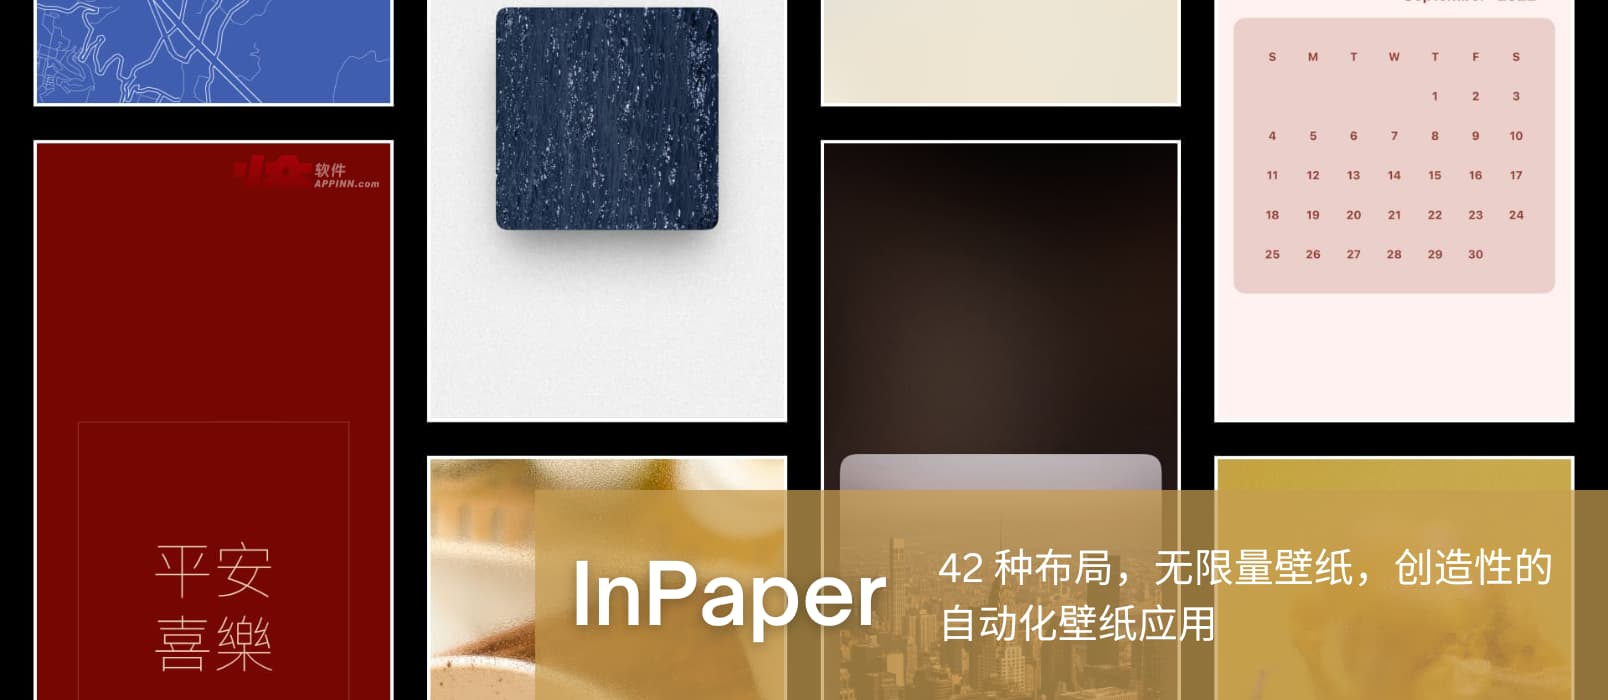 InPaper - 42 种布局，无限量壁纸，创造性的自动化壁纸应用[iPhone/iPad]